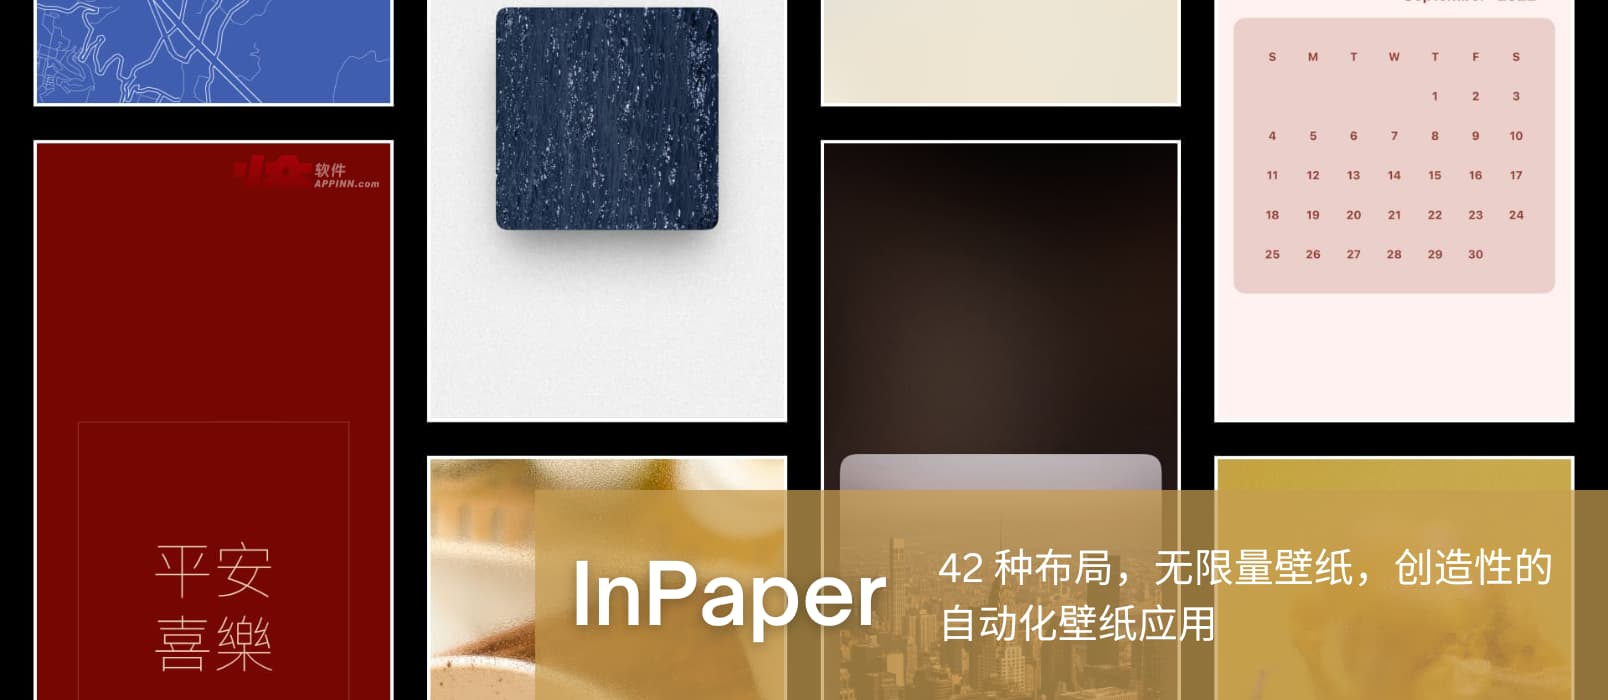 InPaper - 42 种布局，无限量壁纸，创造性的自动化壁纸应用[iPhone/iPad]